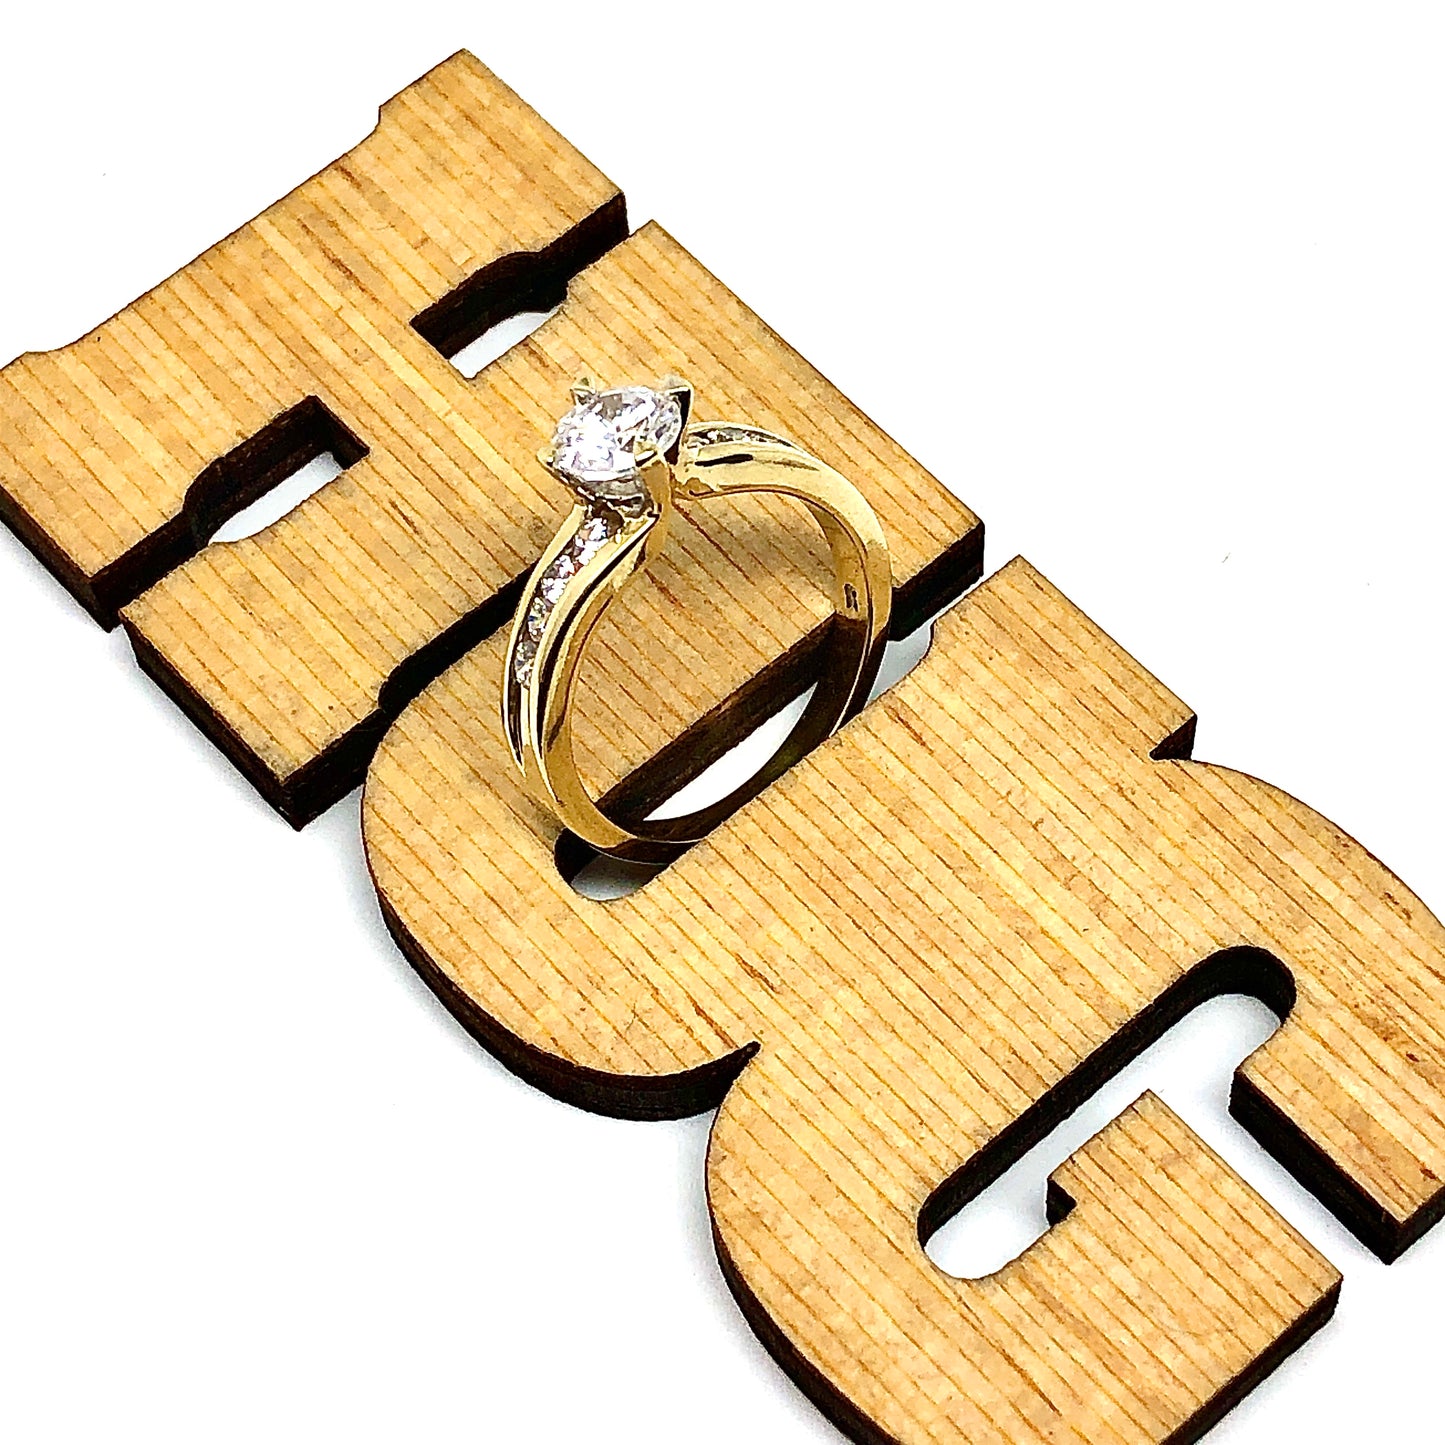 European 9k Gold Beautiful Cubic Zirconia Engagement Ring sz5.75